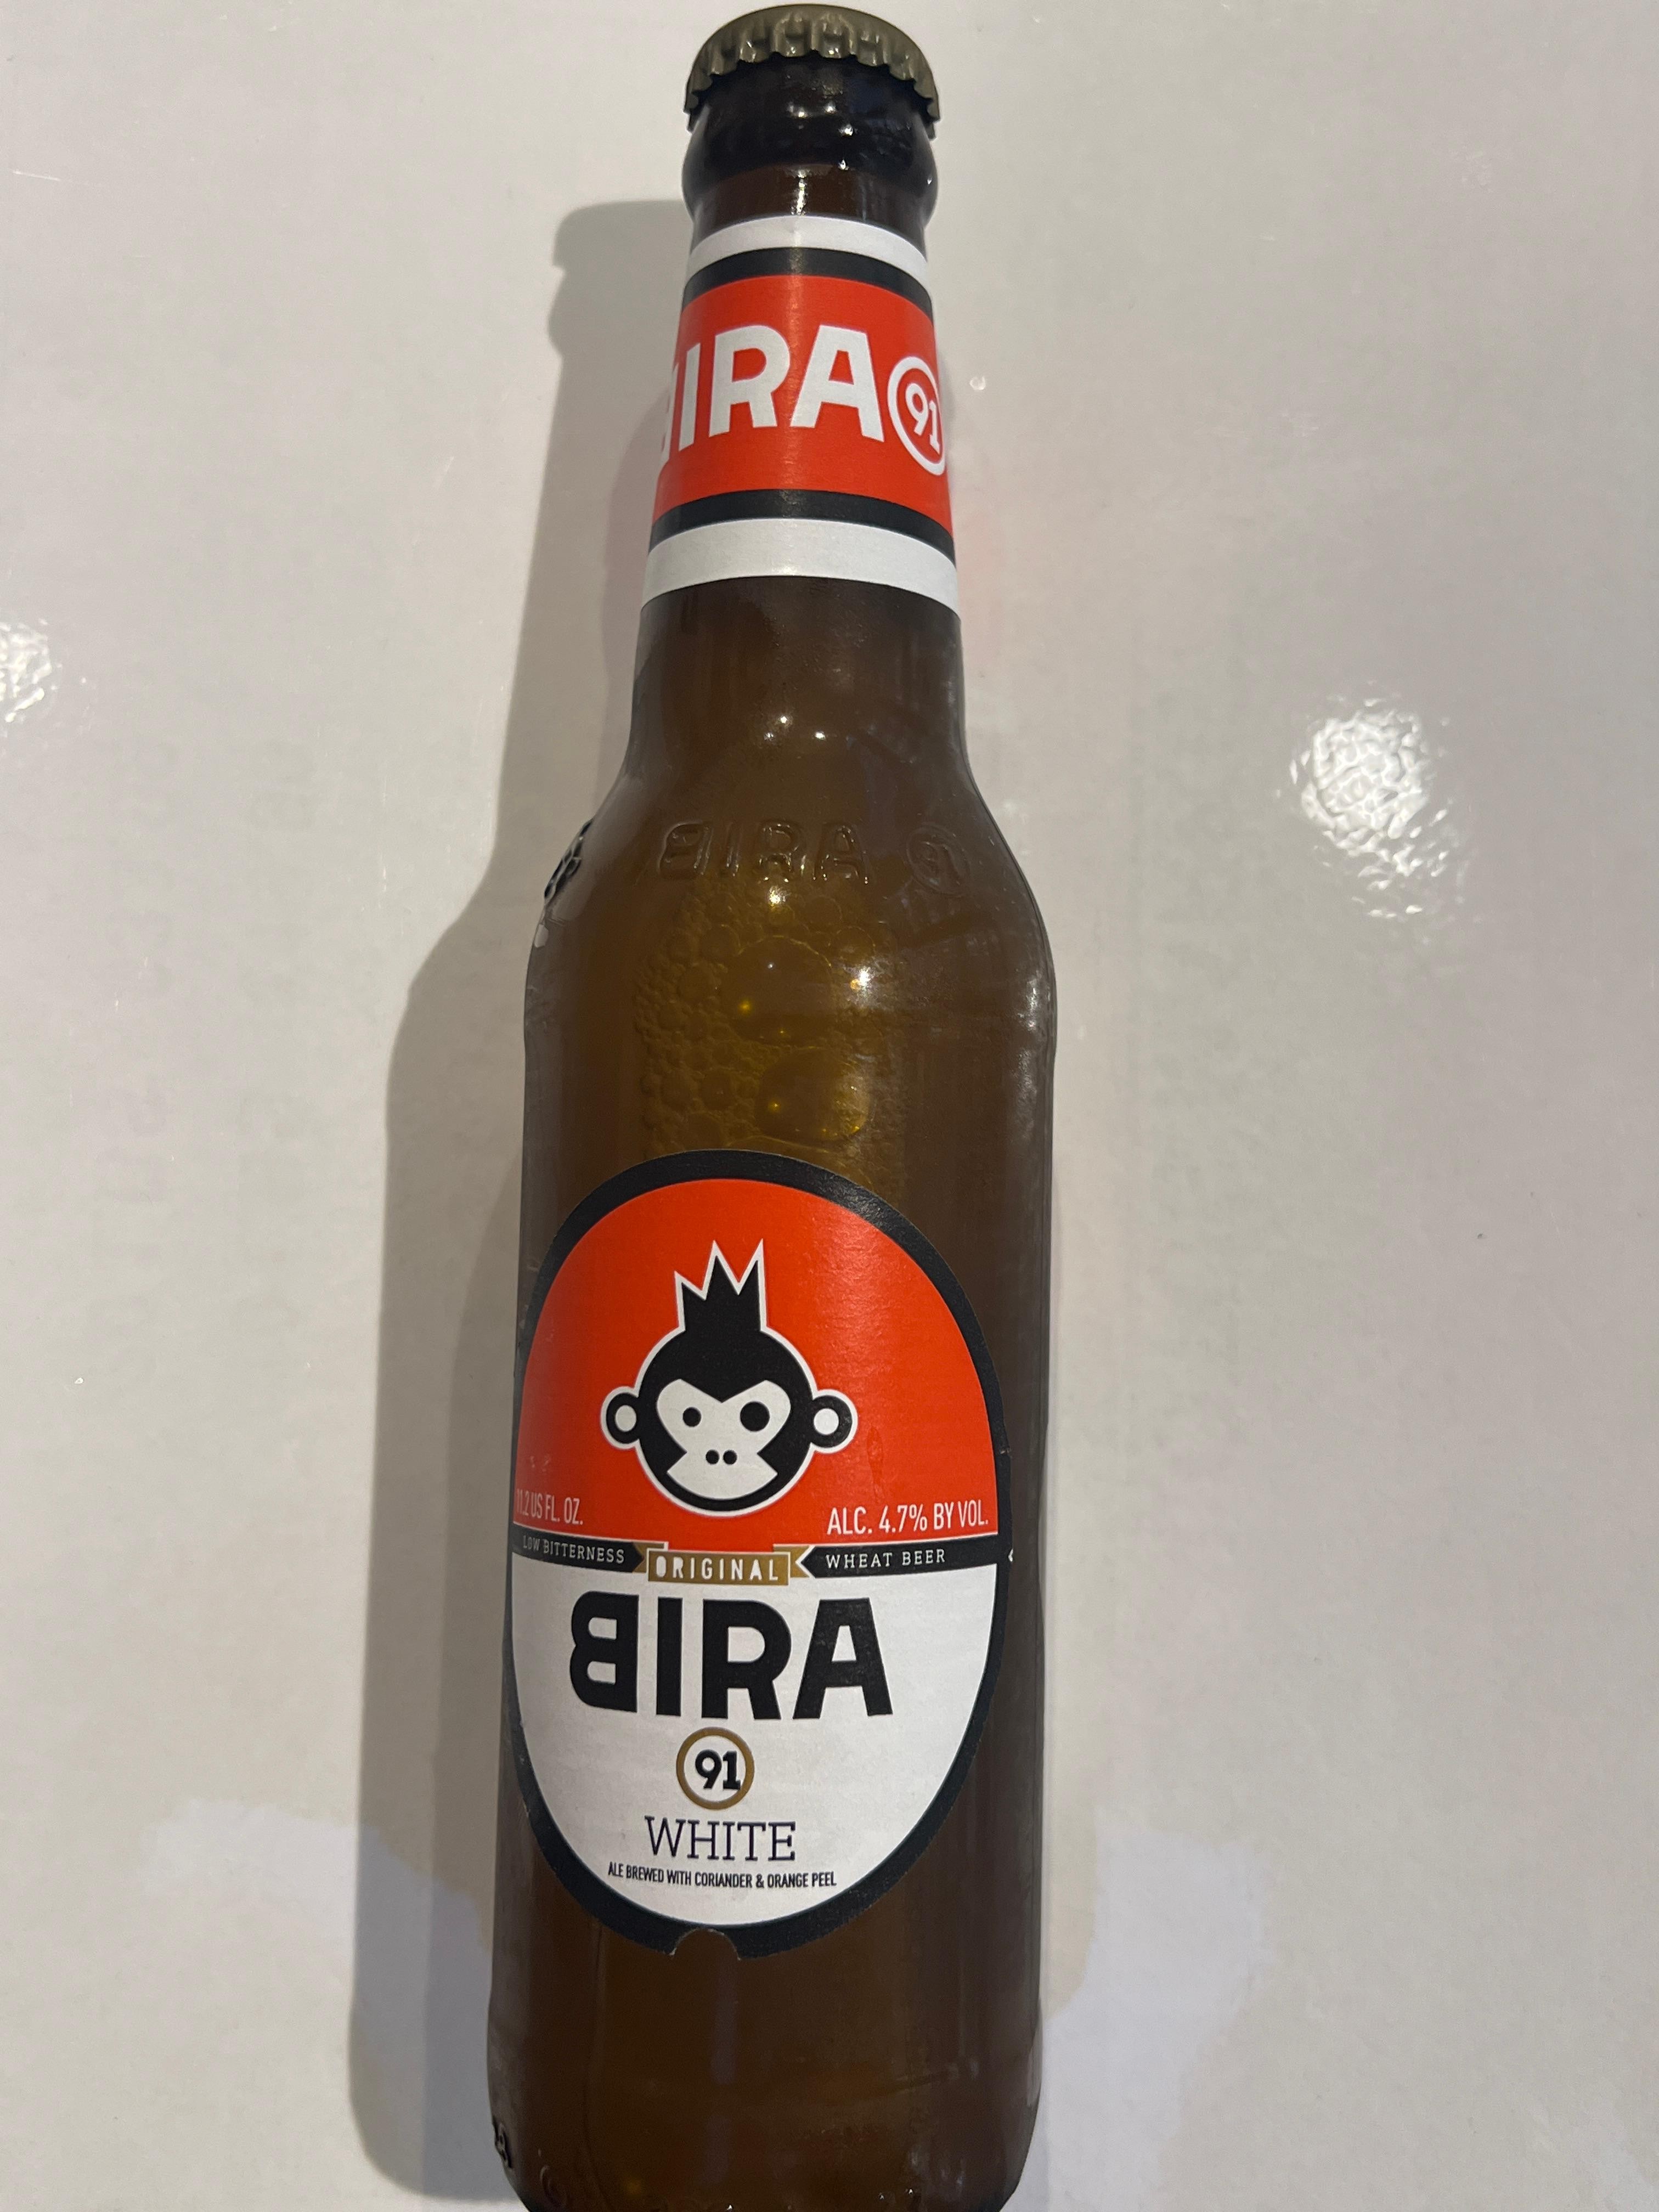 Bira White Beer 4.7% Alc. Vol.